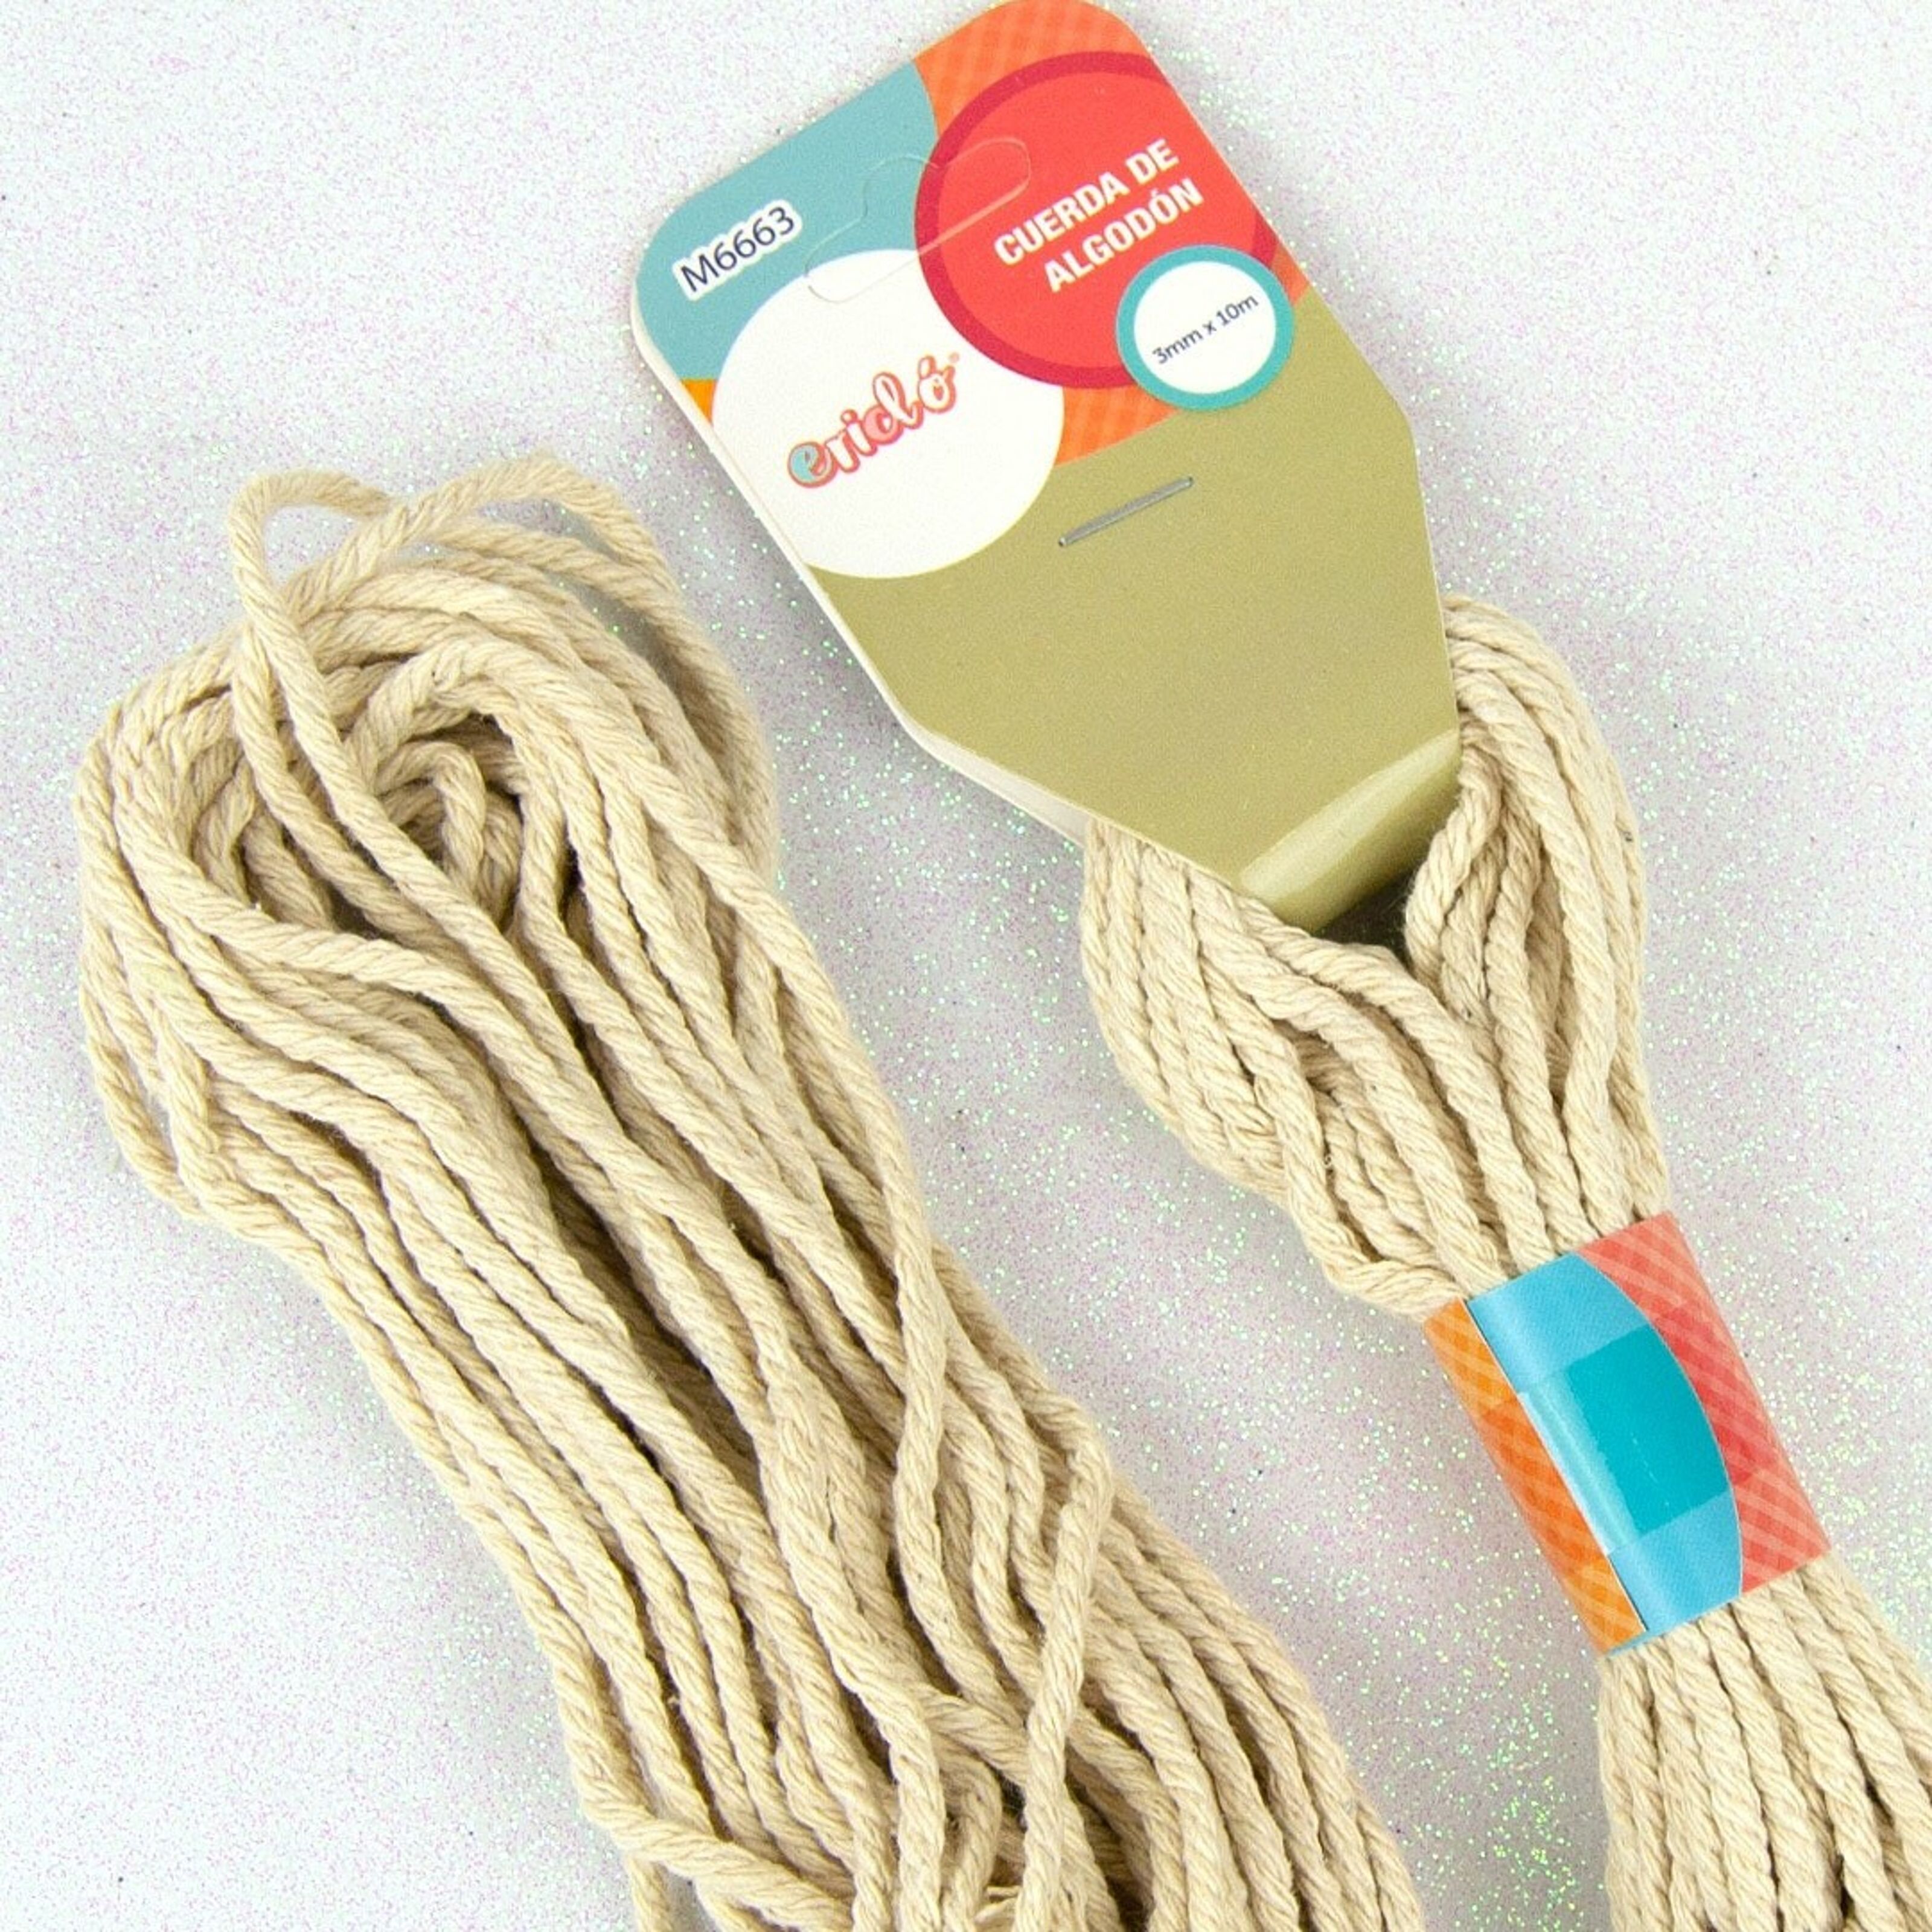 10m Colourful DIY Natural Raffia Paper Cord String